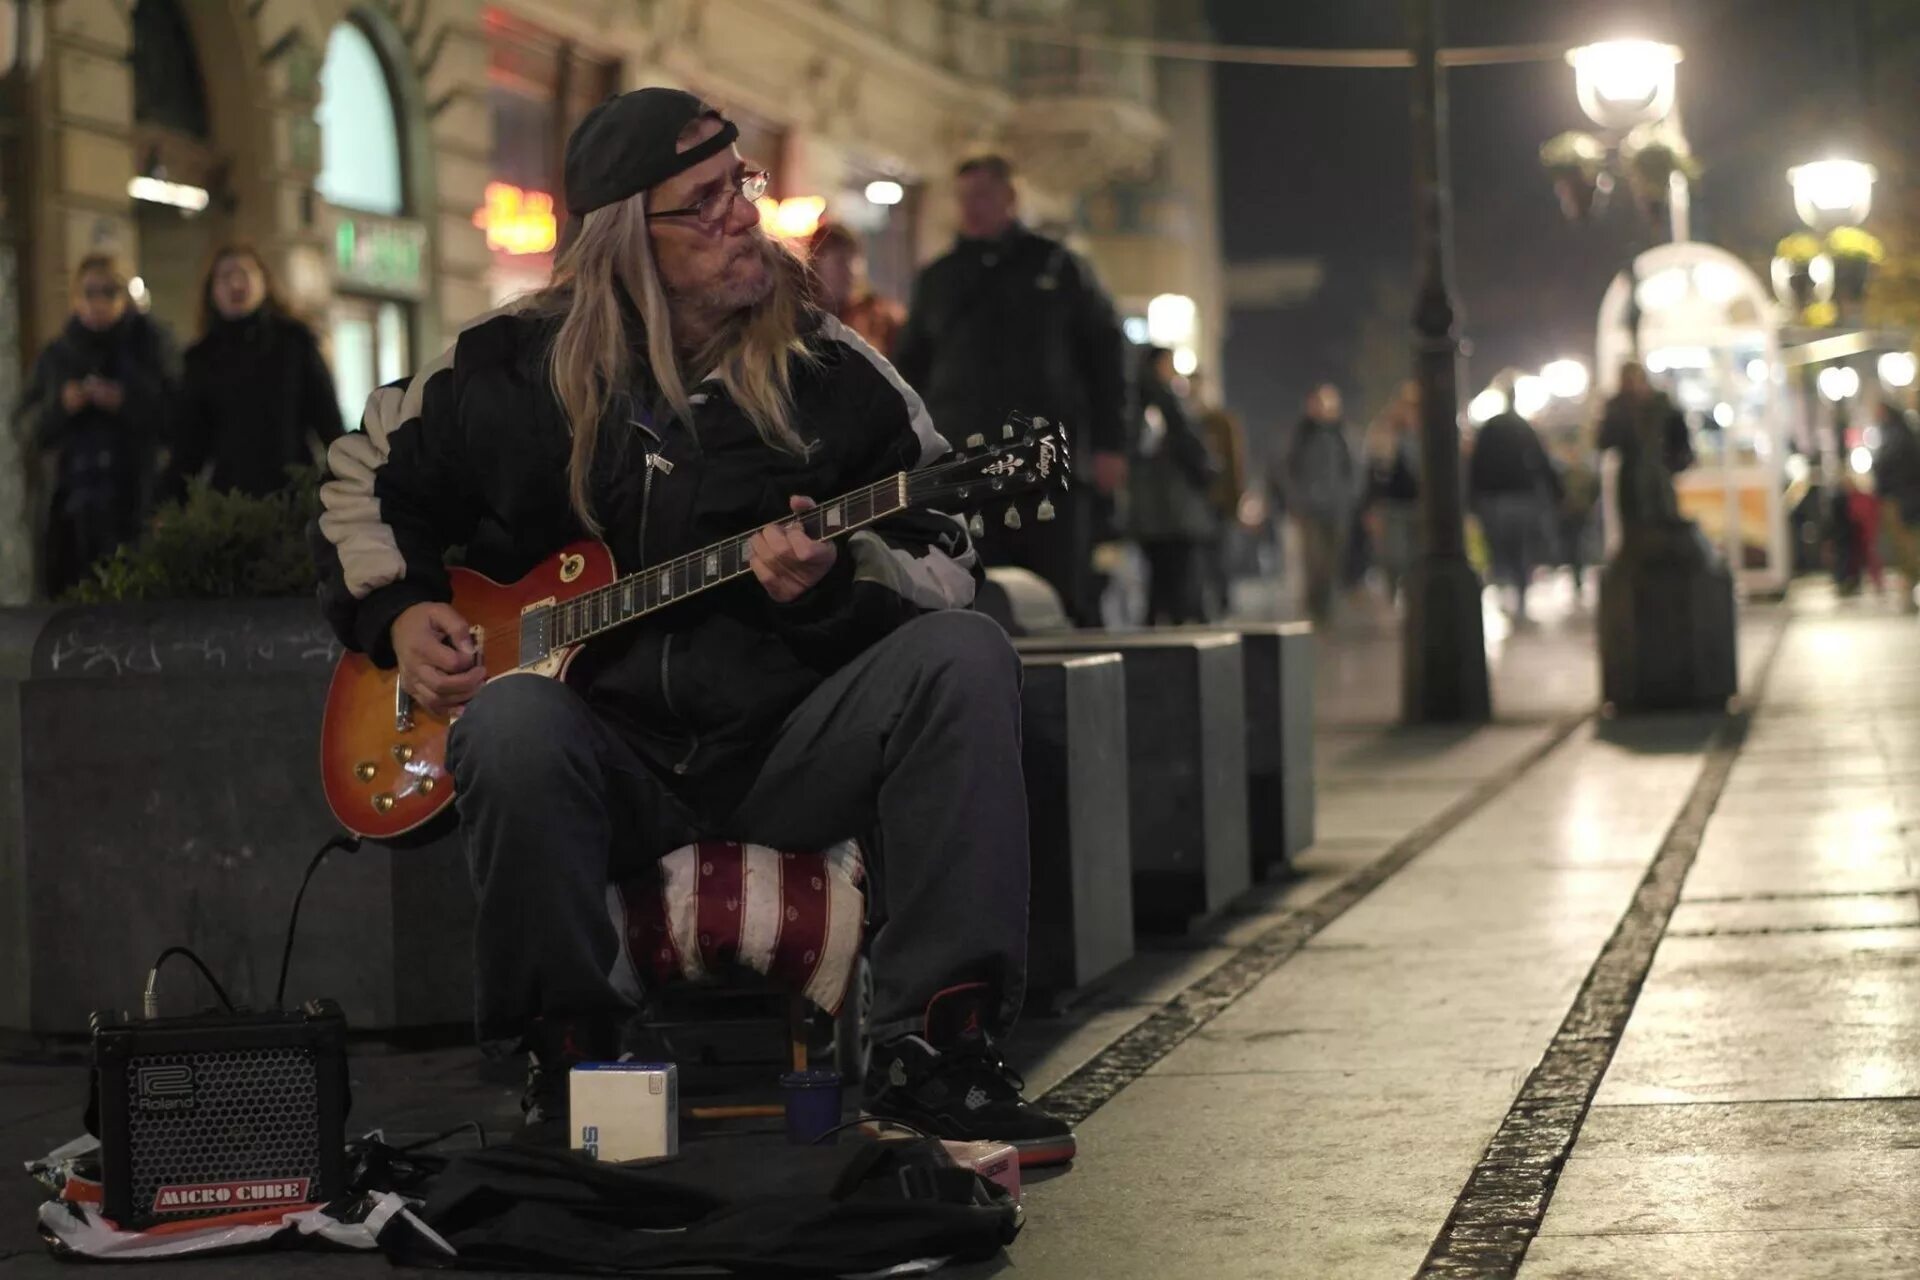 «Уличный музыкант» Street musician, Бенгт Линдстрём. "Гитарист" "уличный музыкант" "Ambient". Уличный гитарист. Уличный музыкант на гитаре.